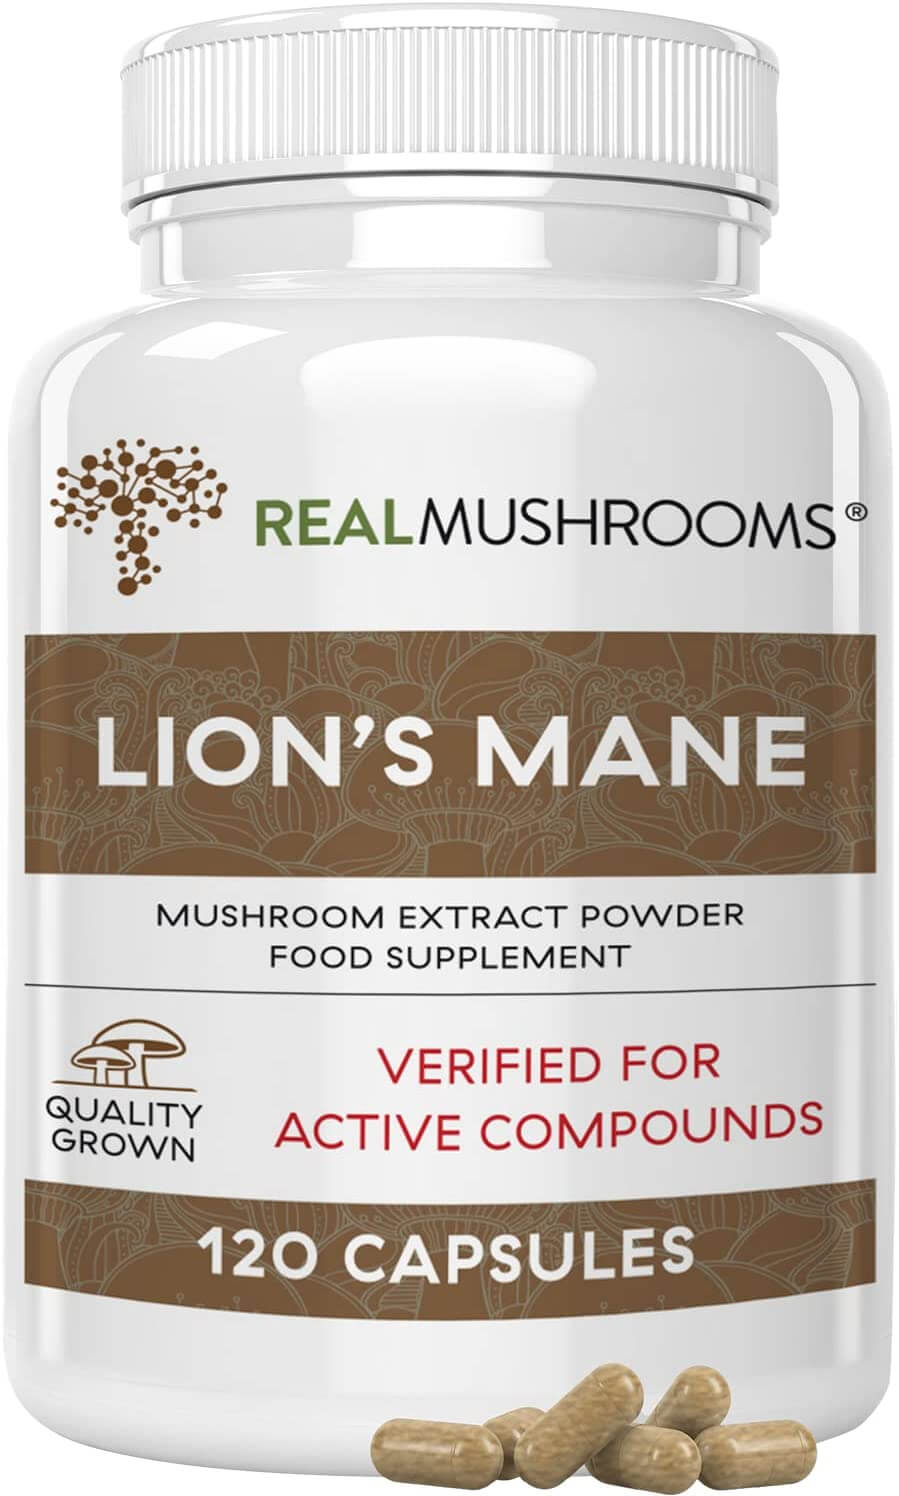 Amazon's Choice: Real Mushrooms Lion's Mane Extract Powder